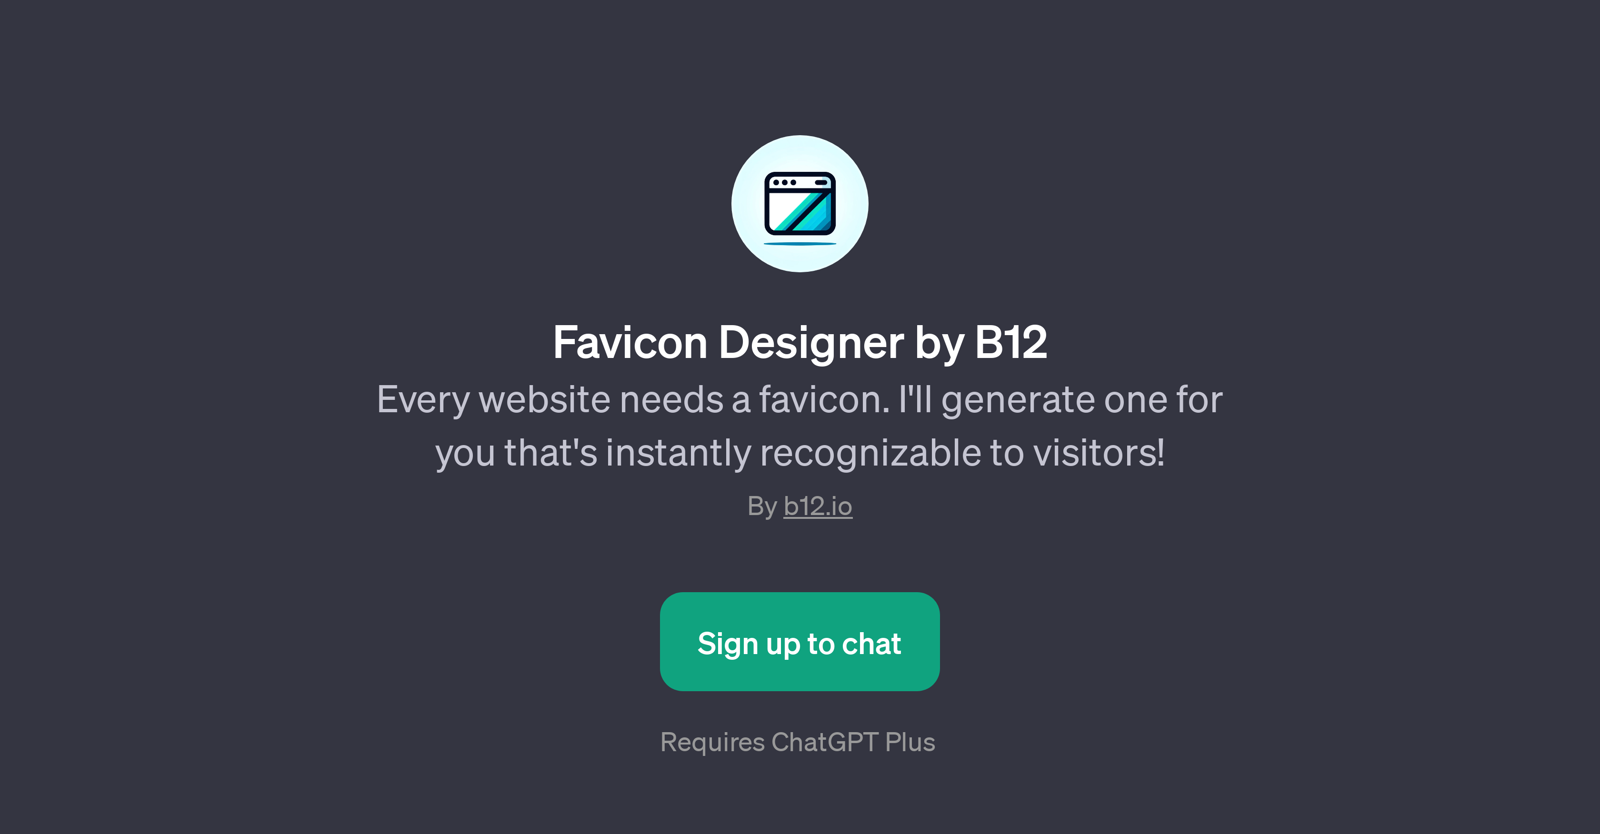 Favicon Designer by B12 website